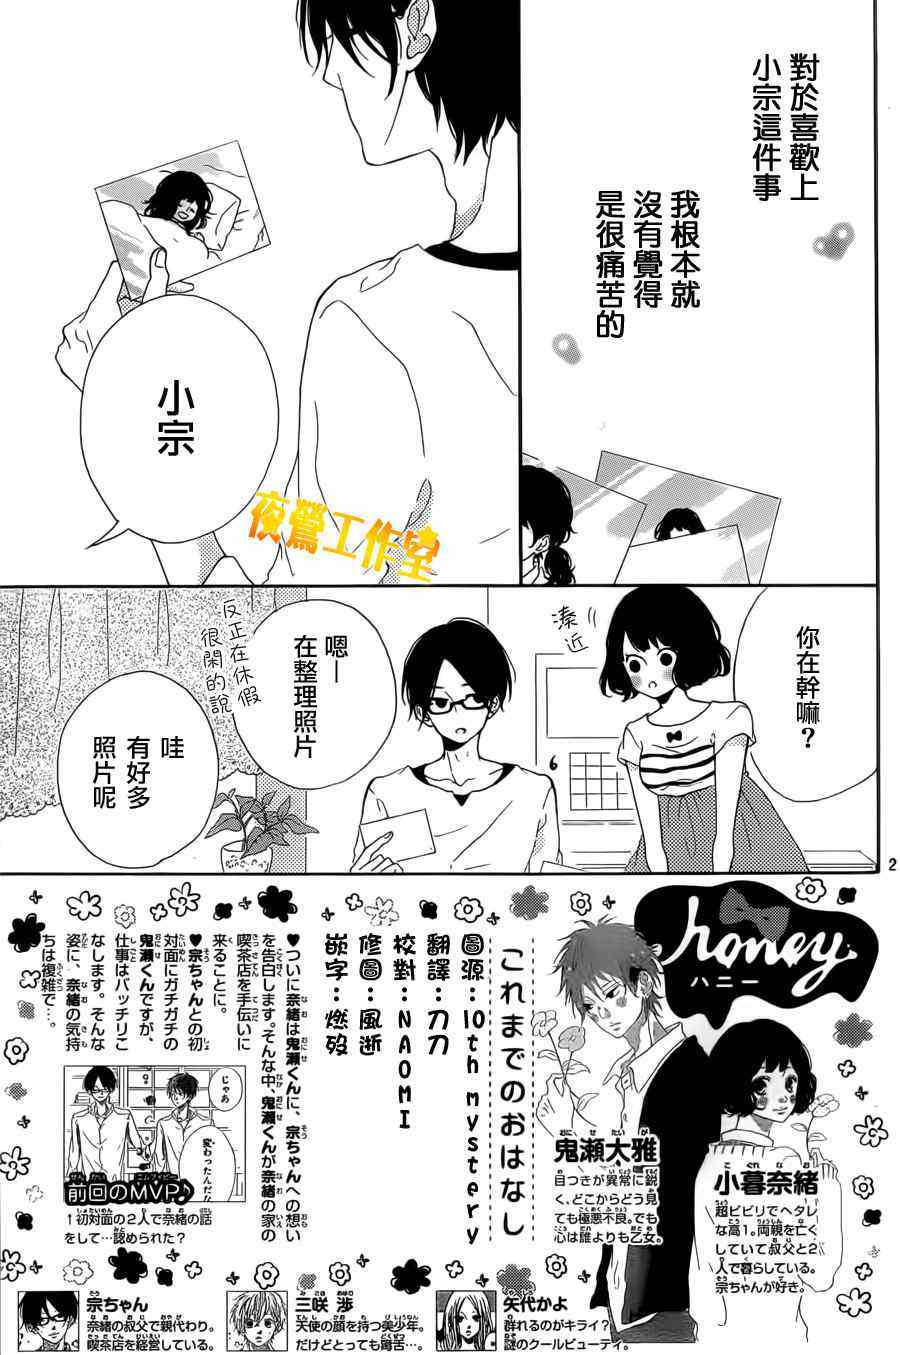 《Honey》漫画 006集